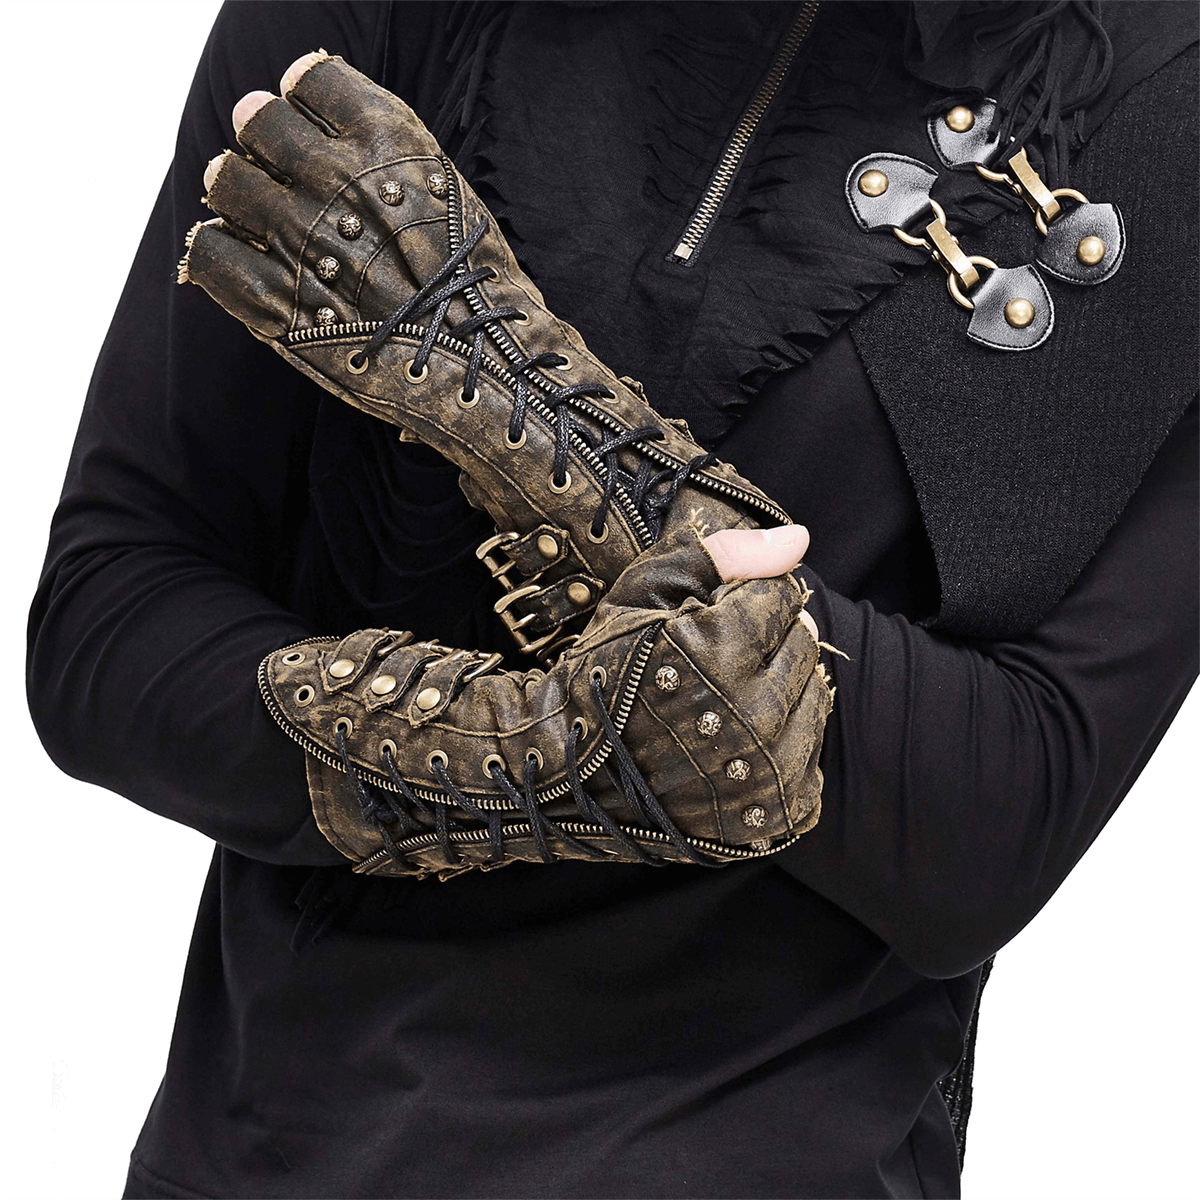 Unisex Steampunk Fingerless Gauntlet Gloves / Vintage Brown Gloves with Buckled Straps & Lacing - HARD'N'HEAVY